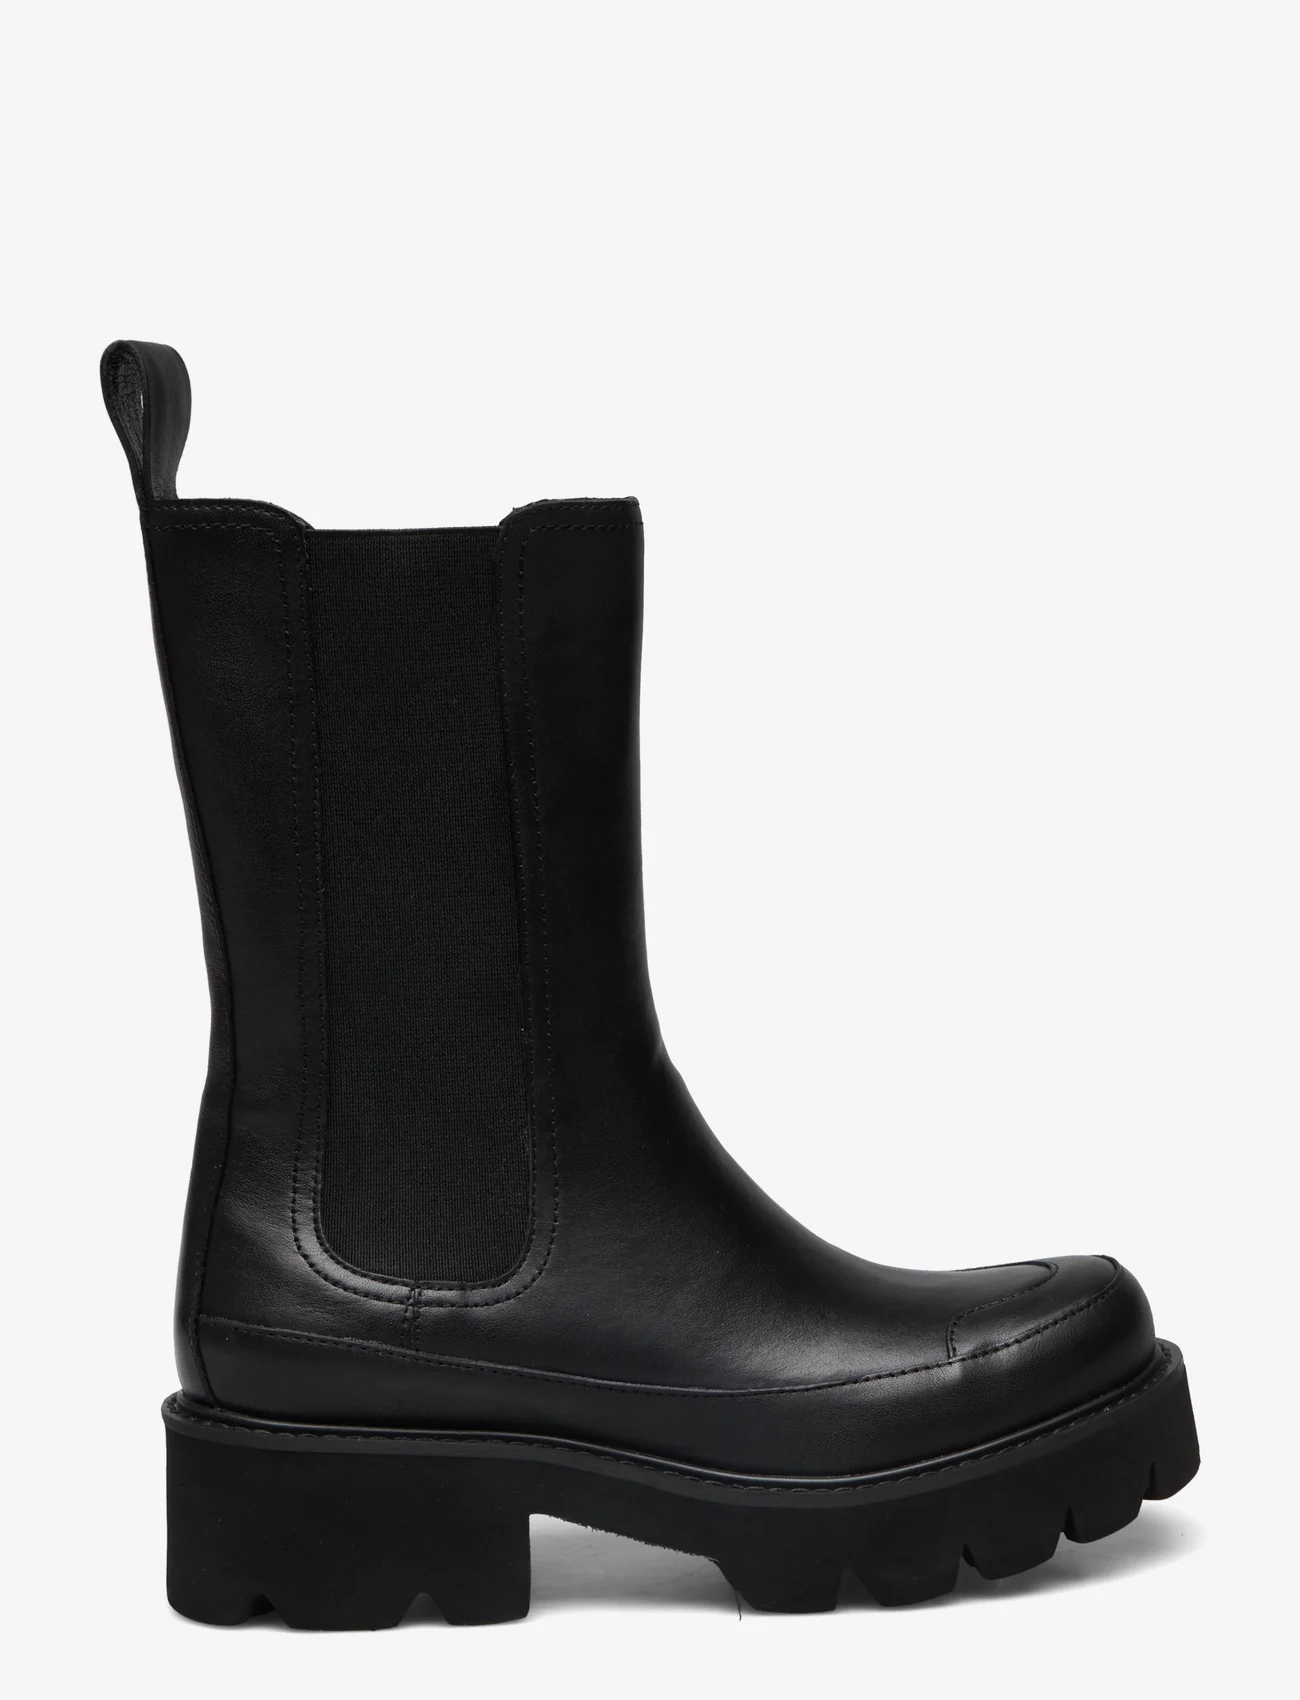 Ilse Jacobsen - Boots others - chelsea boots - black - 1